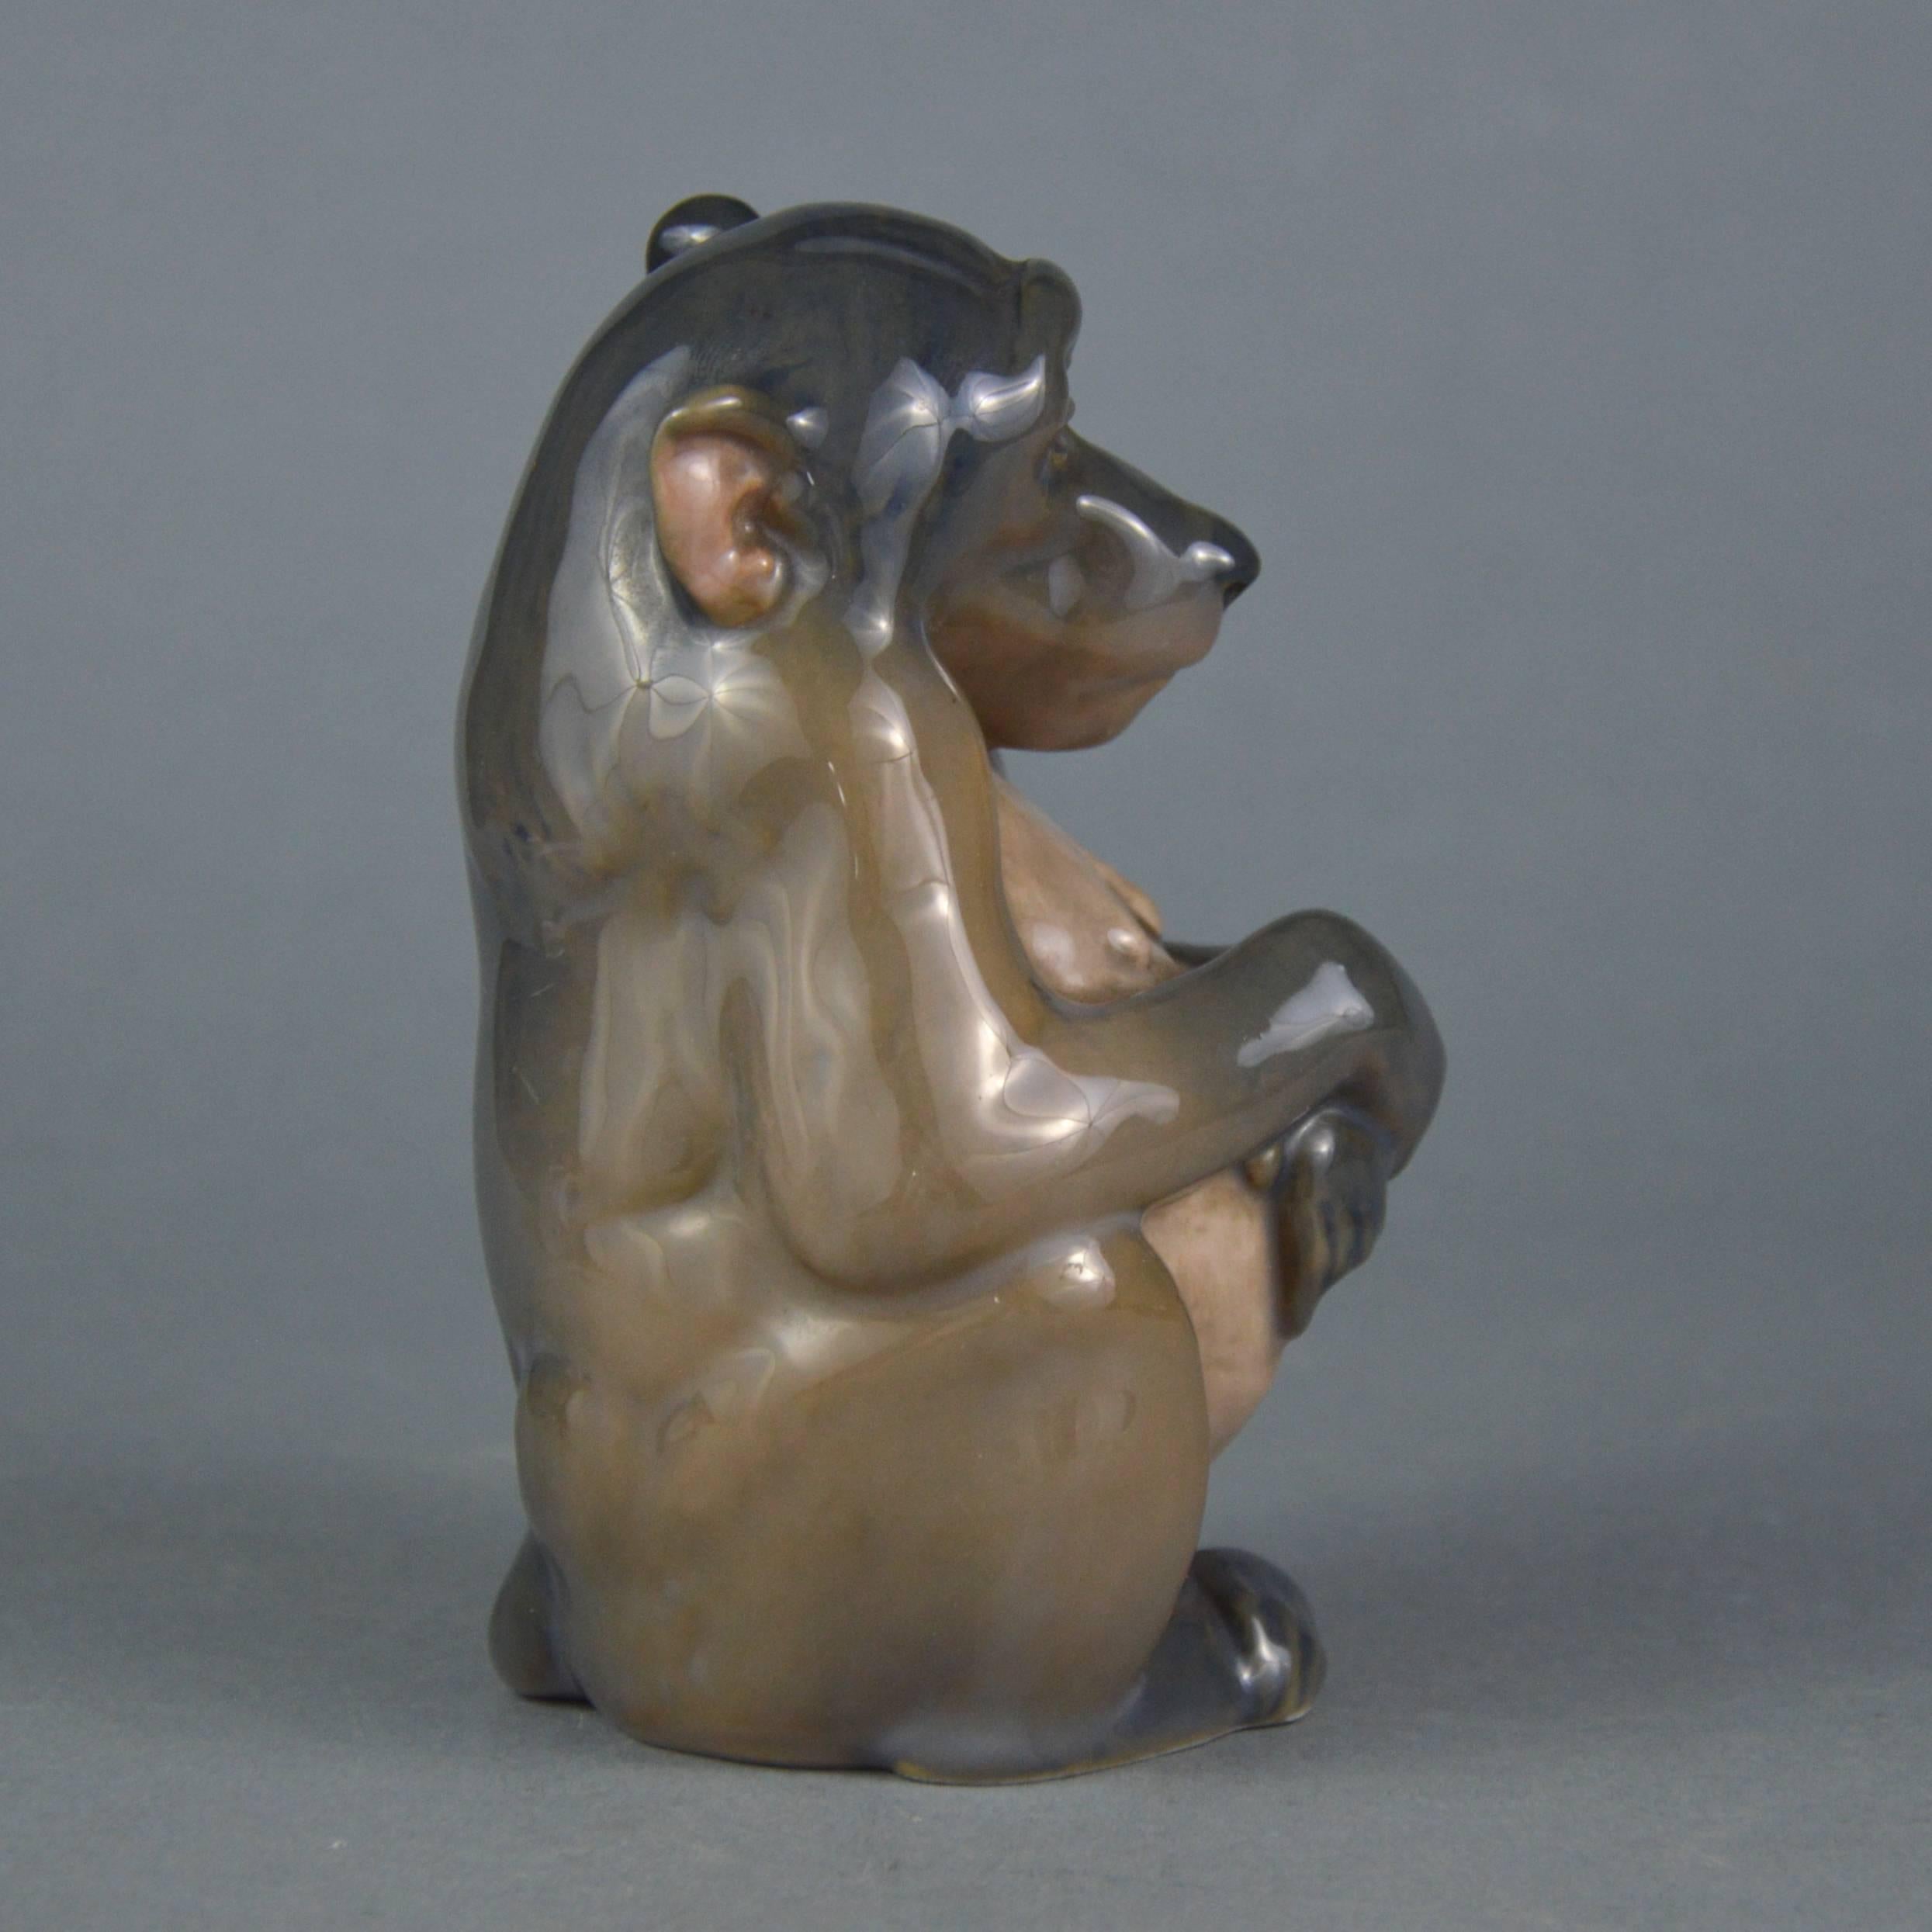 Cast Royal Copenhagen Porcelain Figurine of a Sitting Monkey by Niels Nielsen, 1913